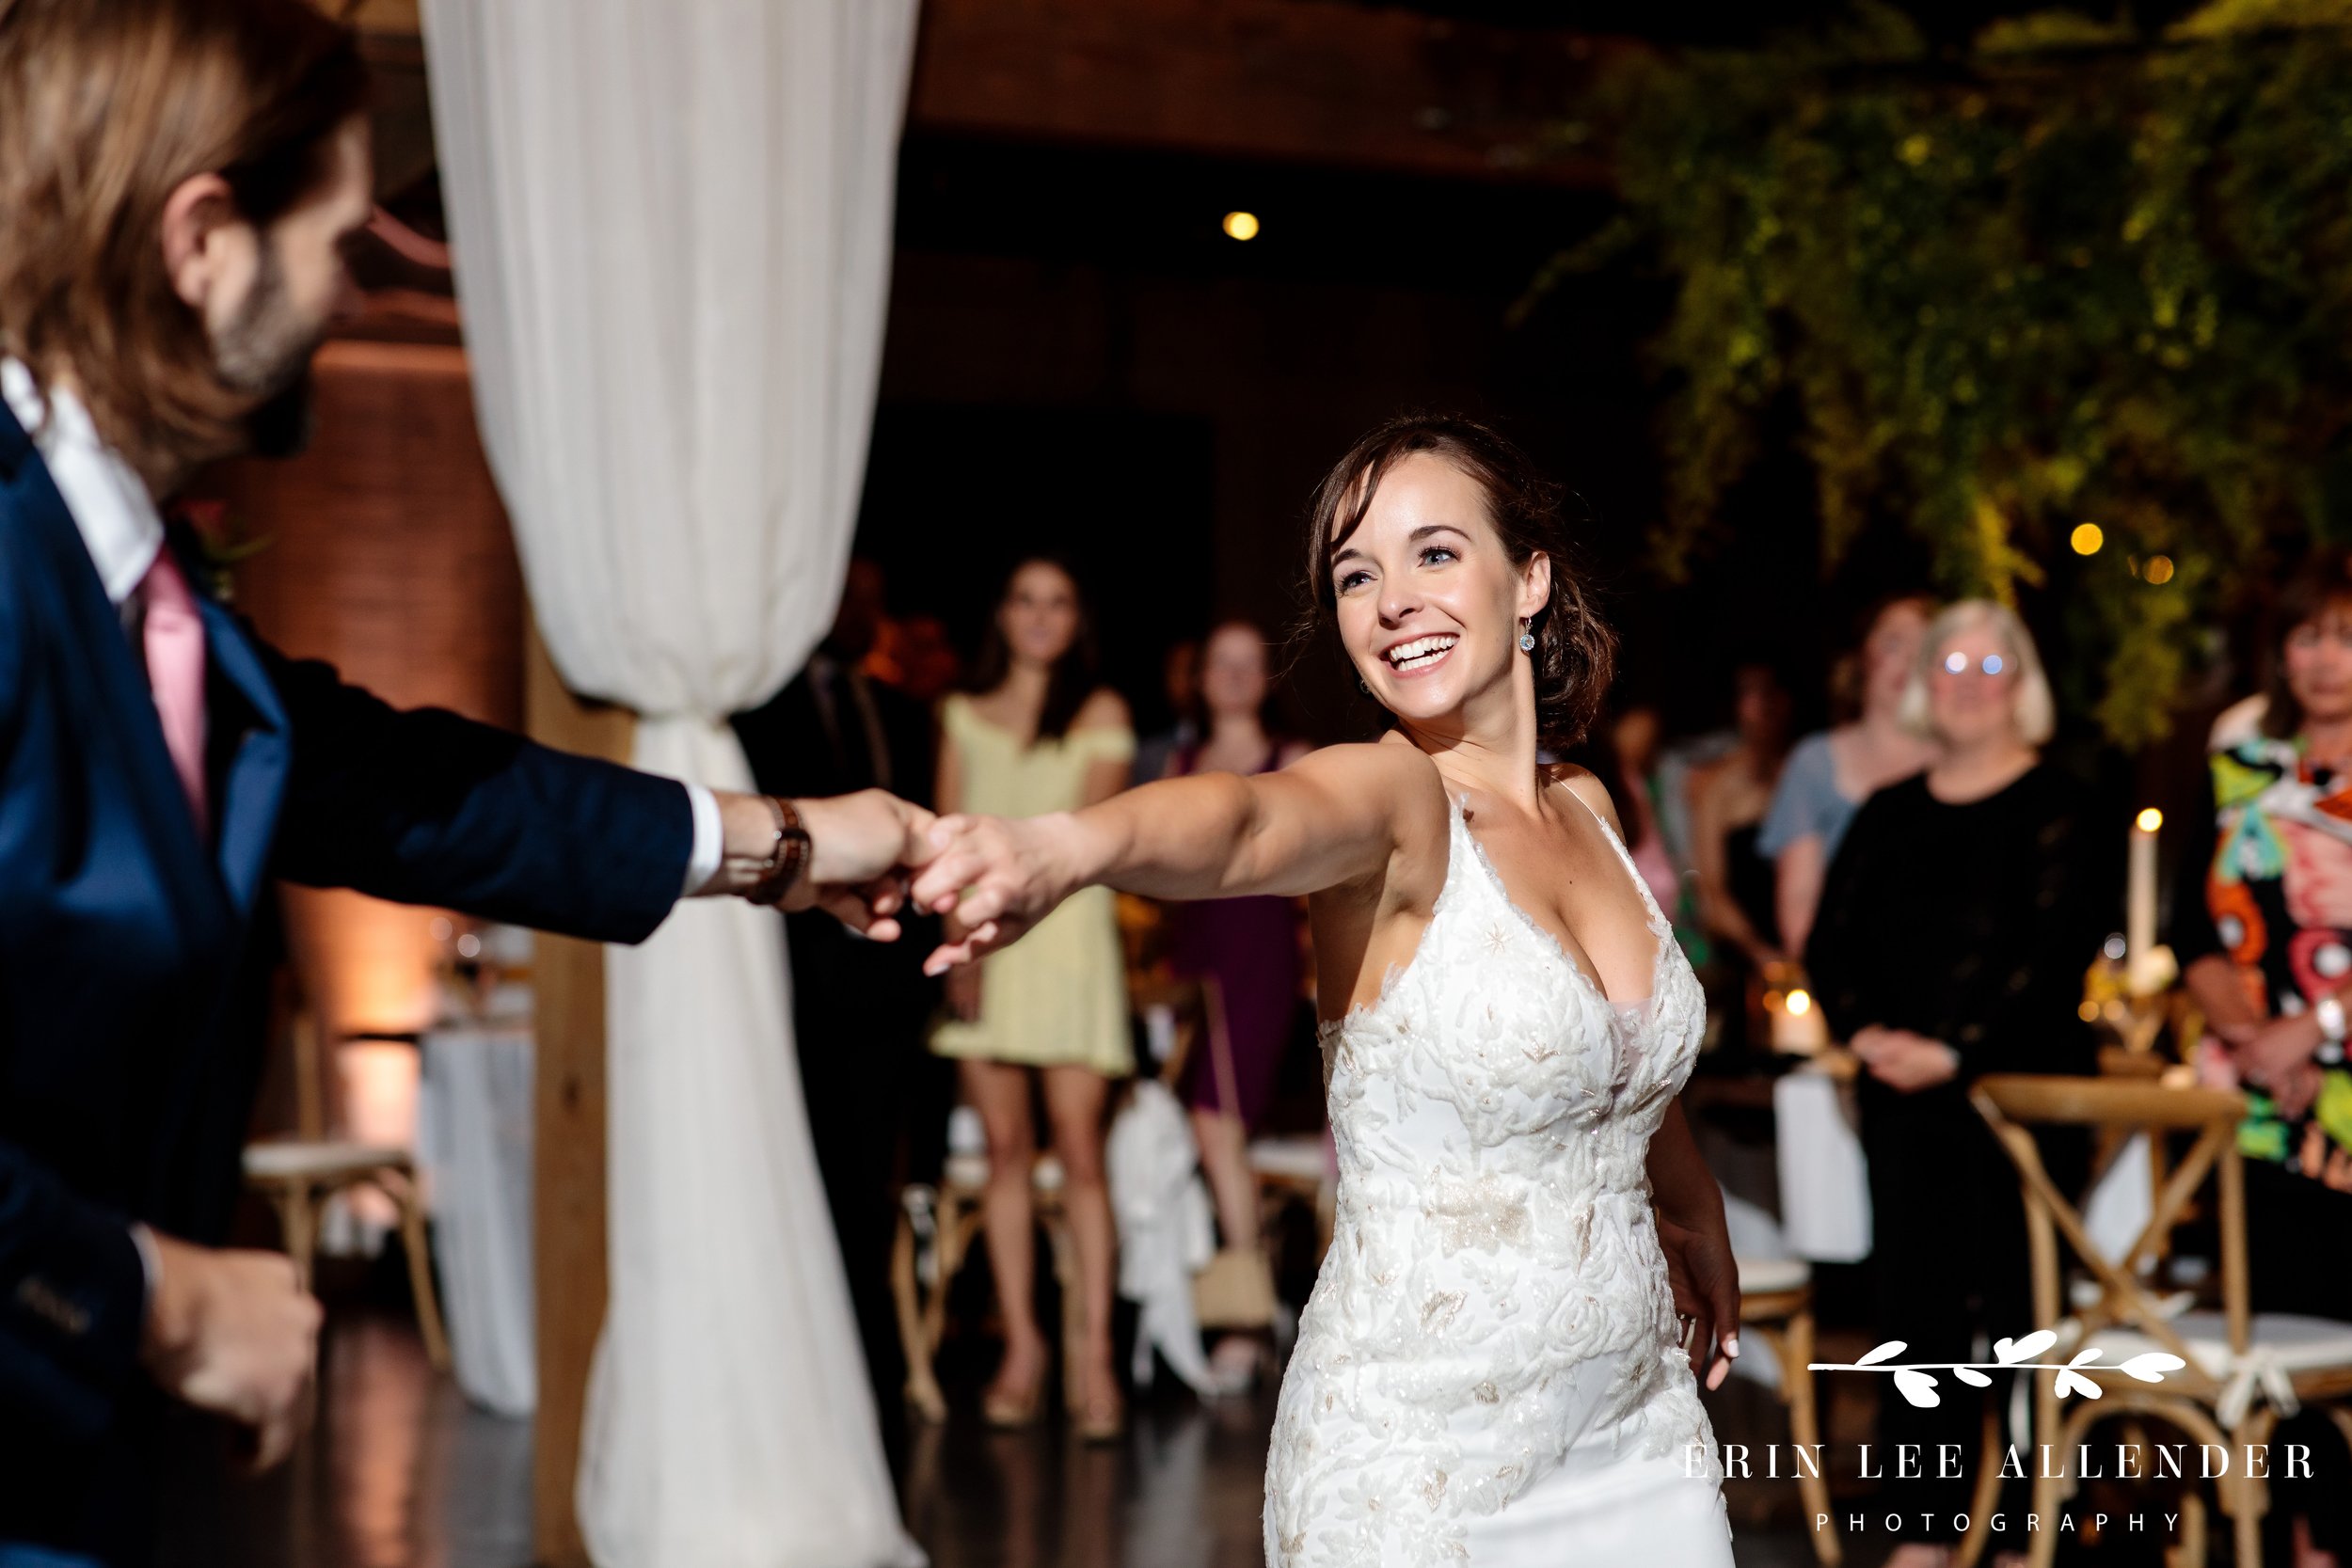 First-wedding-dance